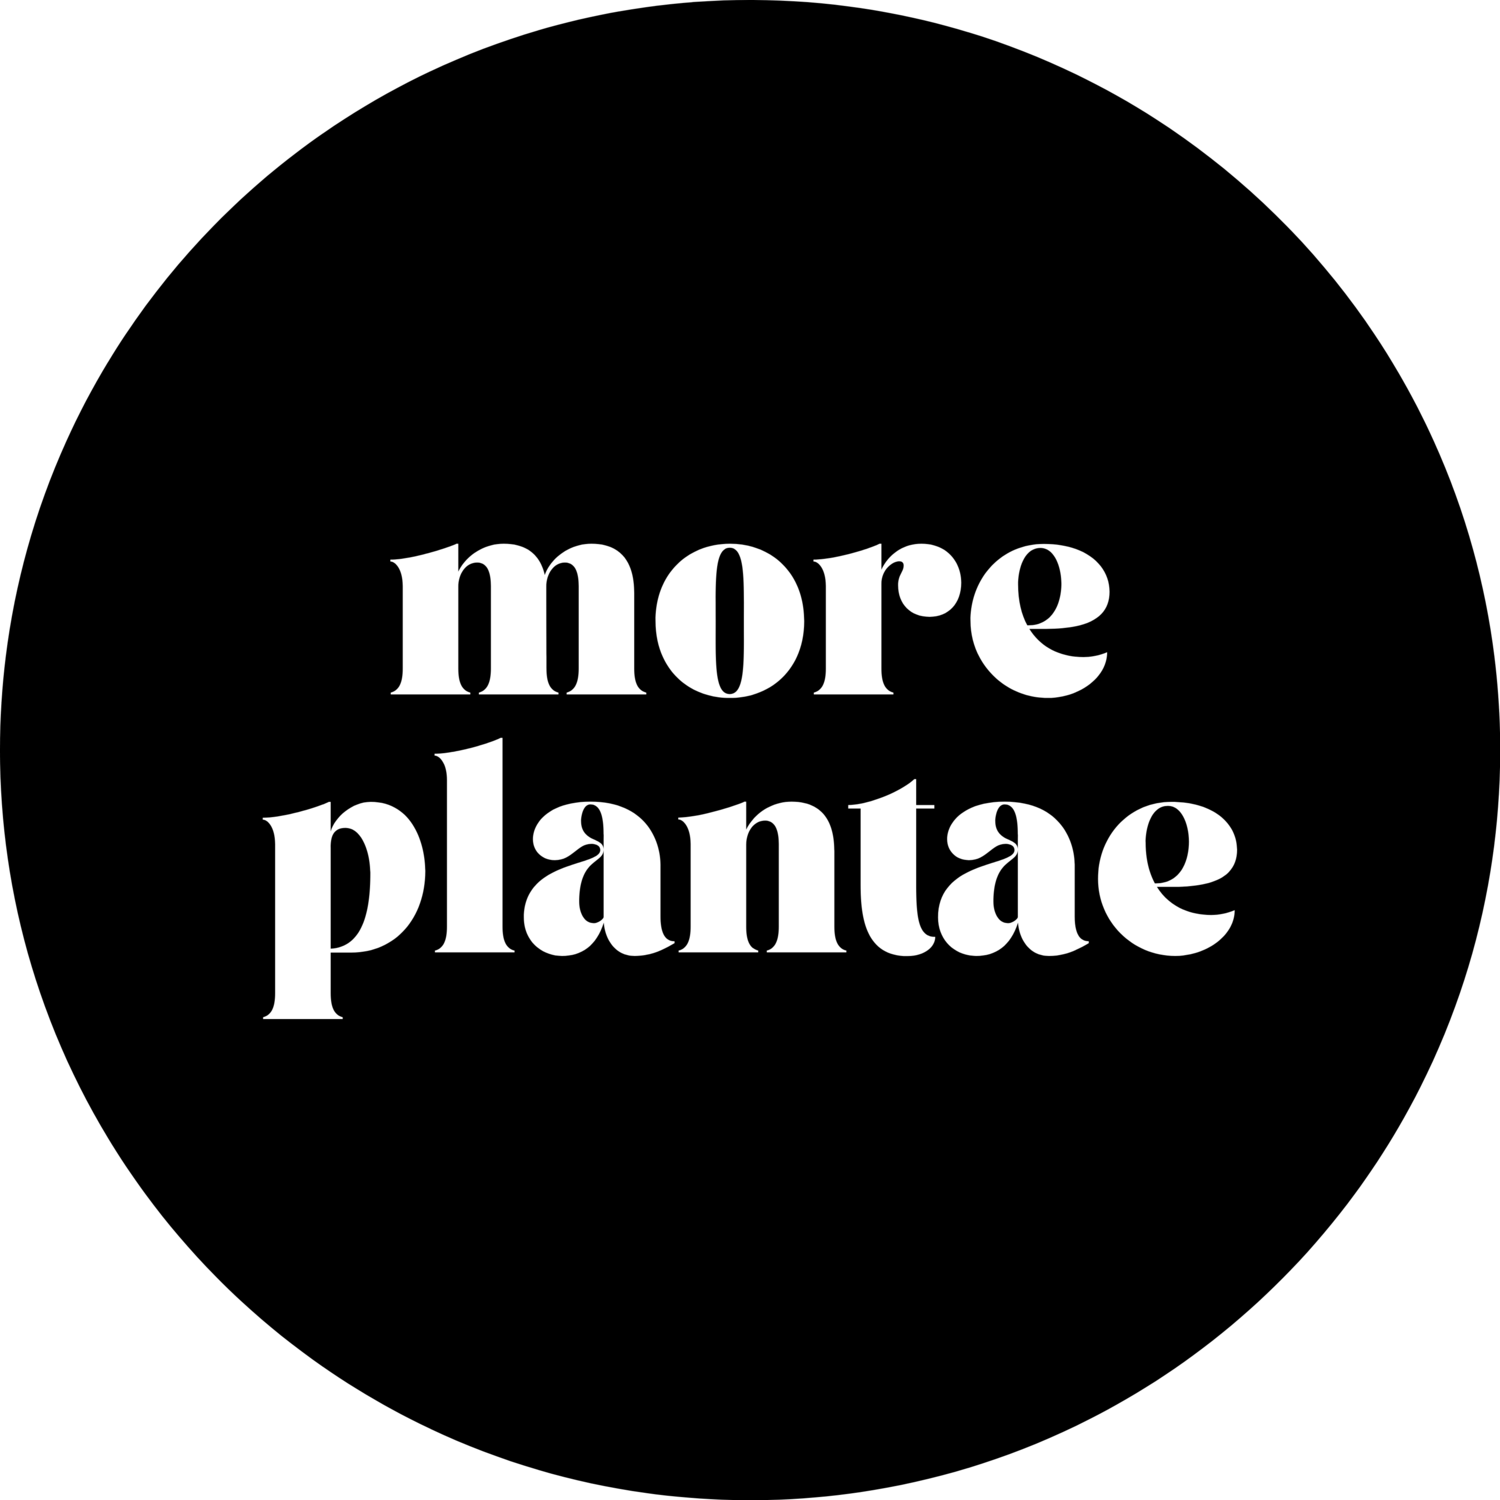 + Plantae